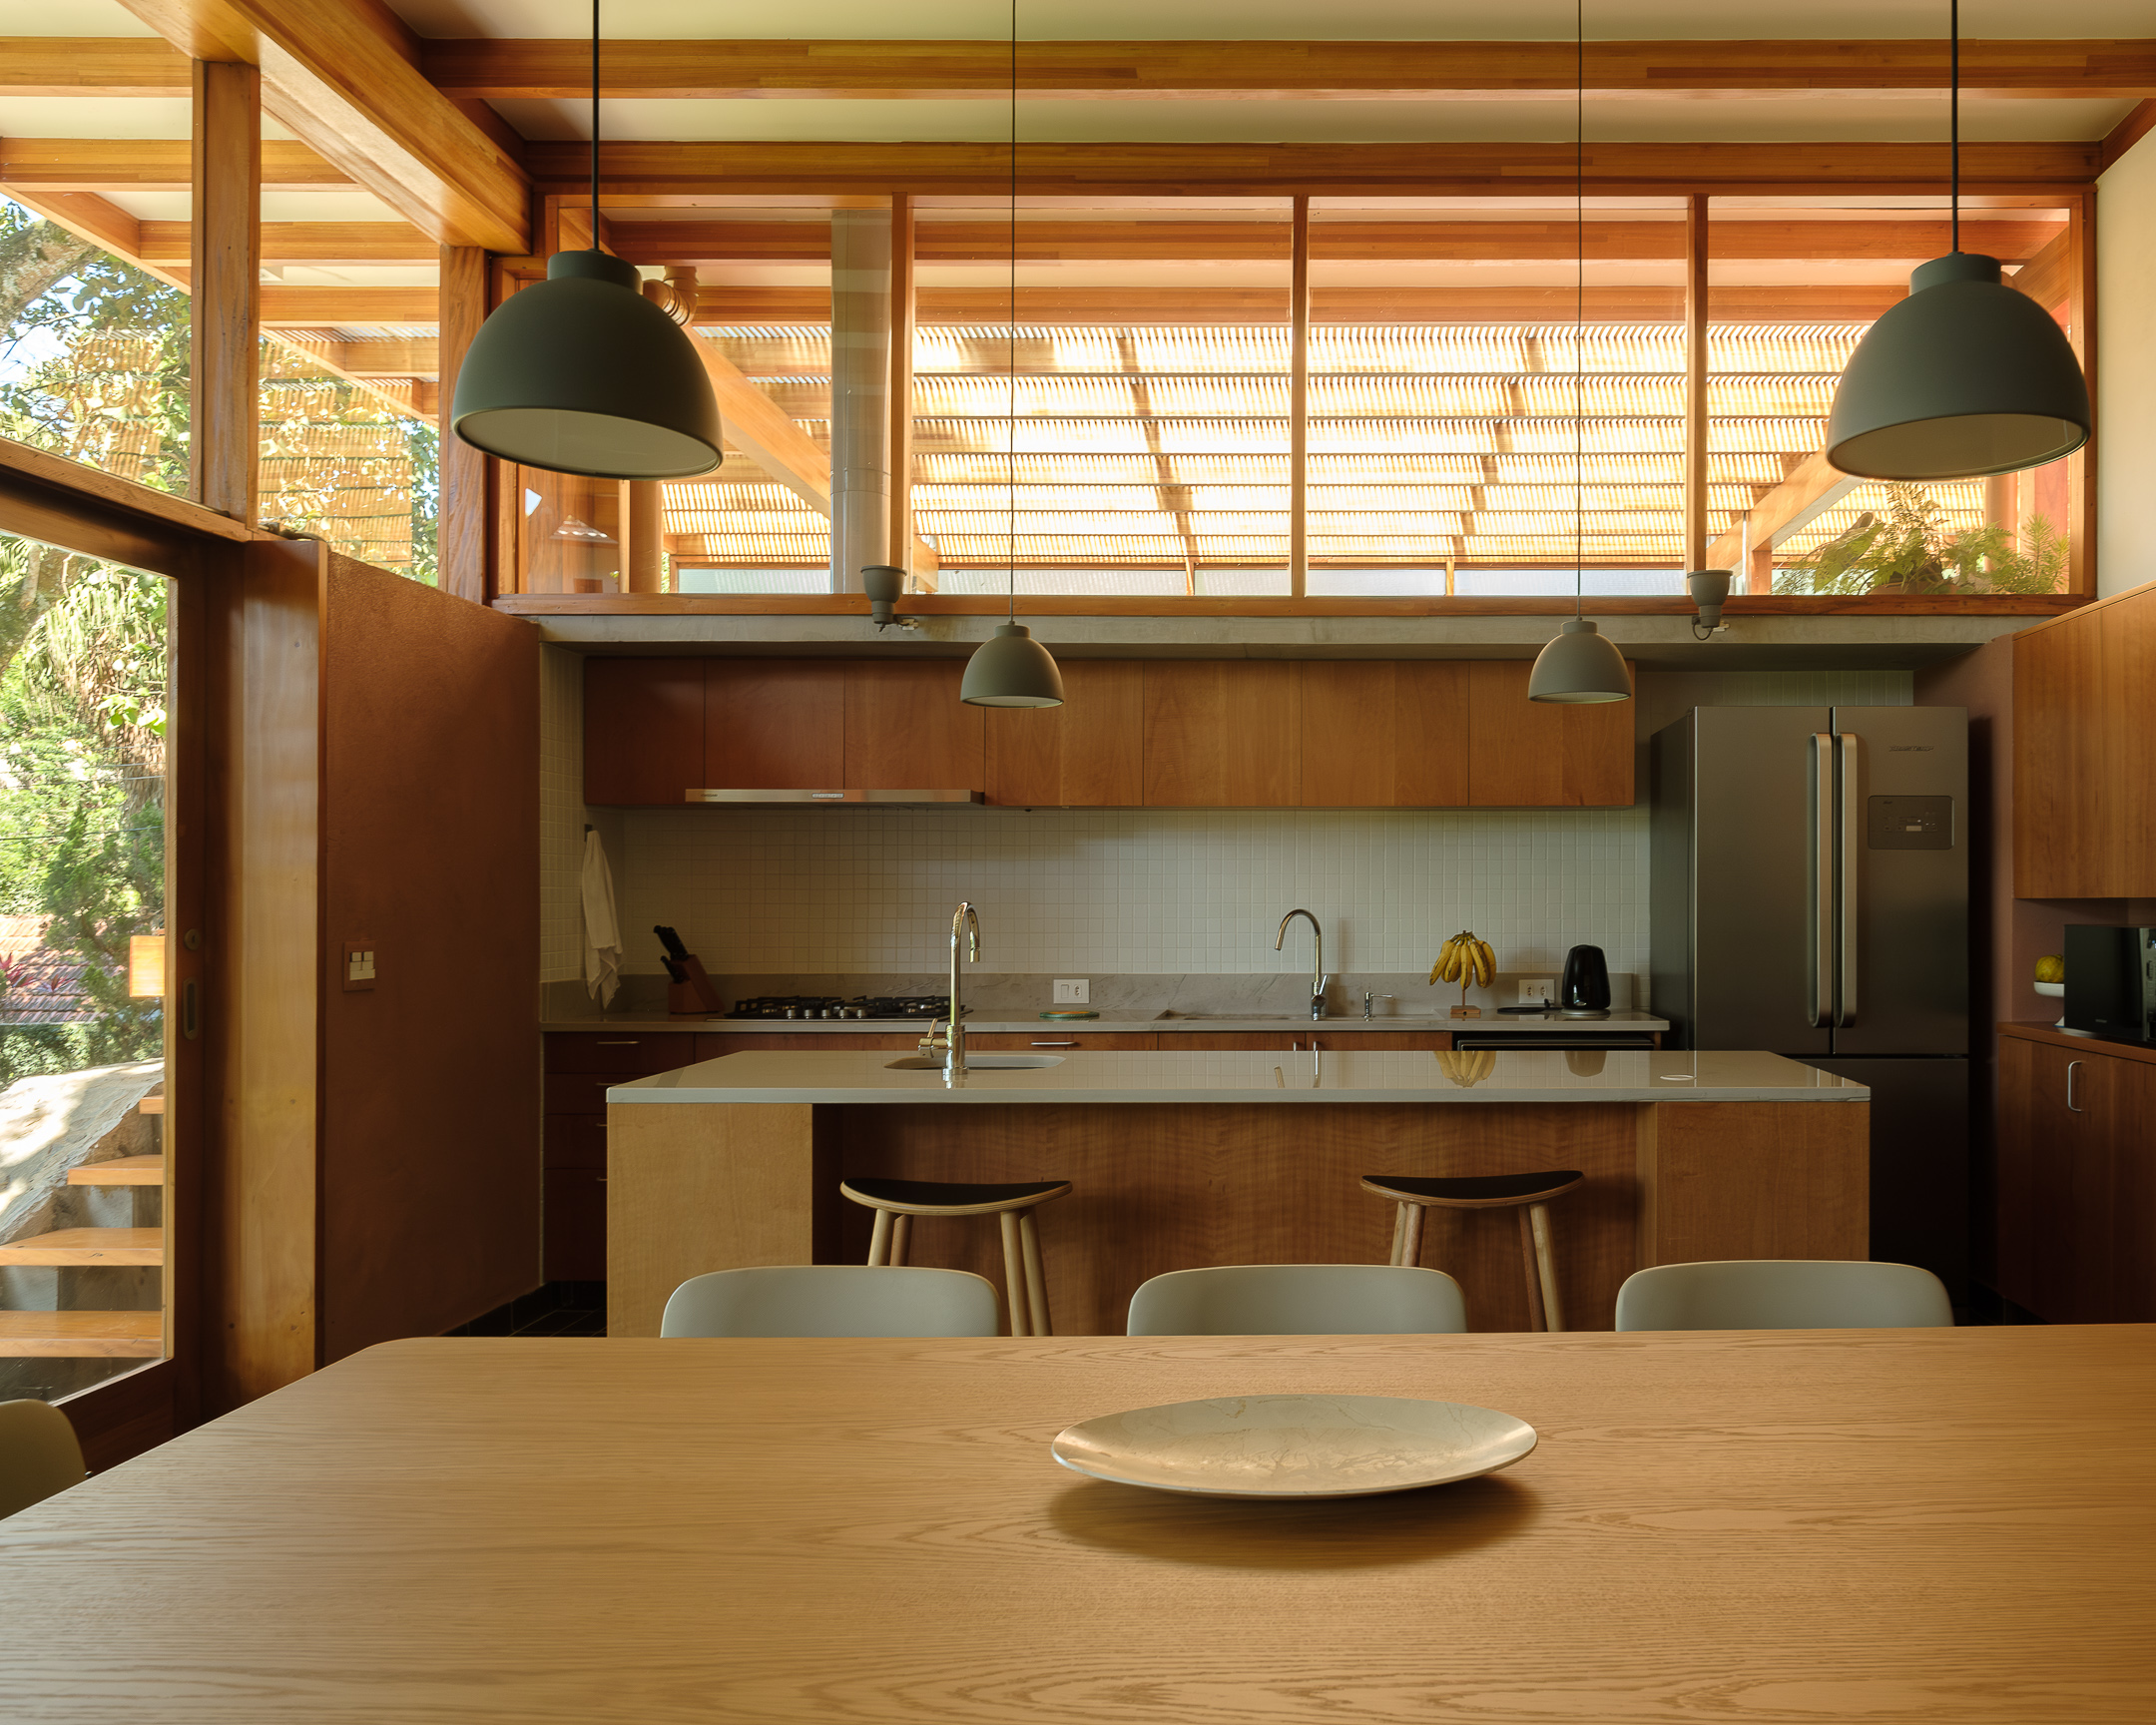 Brazilian garden dwelling living and kitchen interior